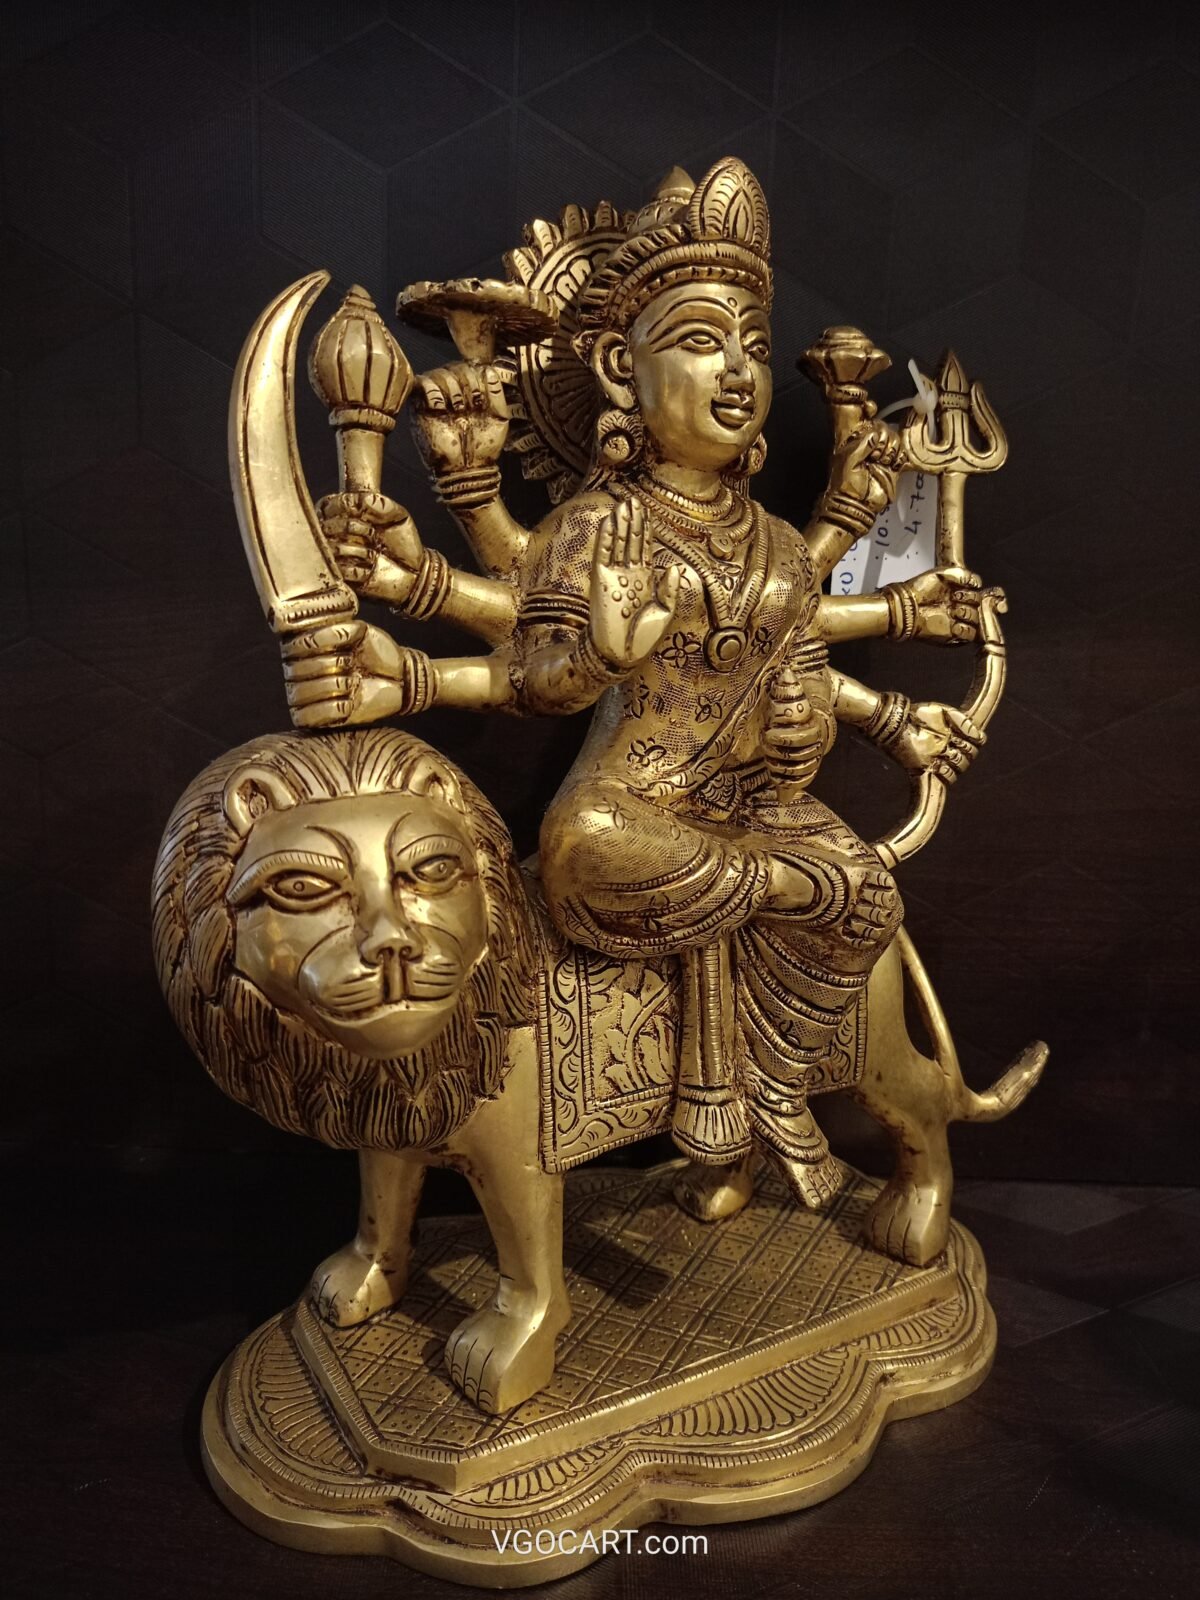 brass lakshmi idol pooja gift vgocart coimbatore india2 scaled